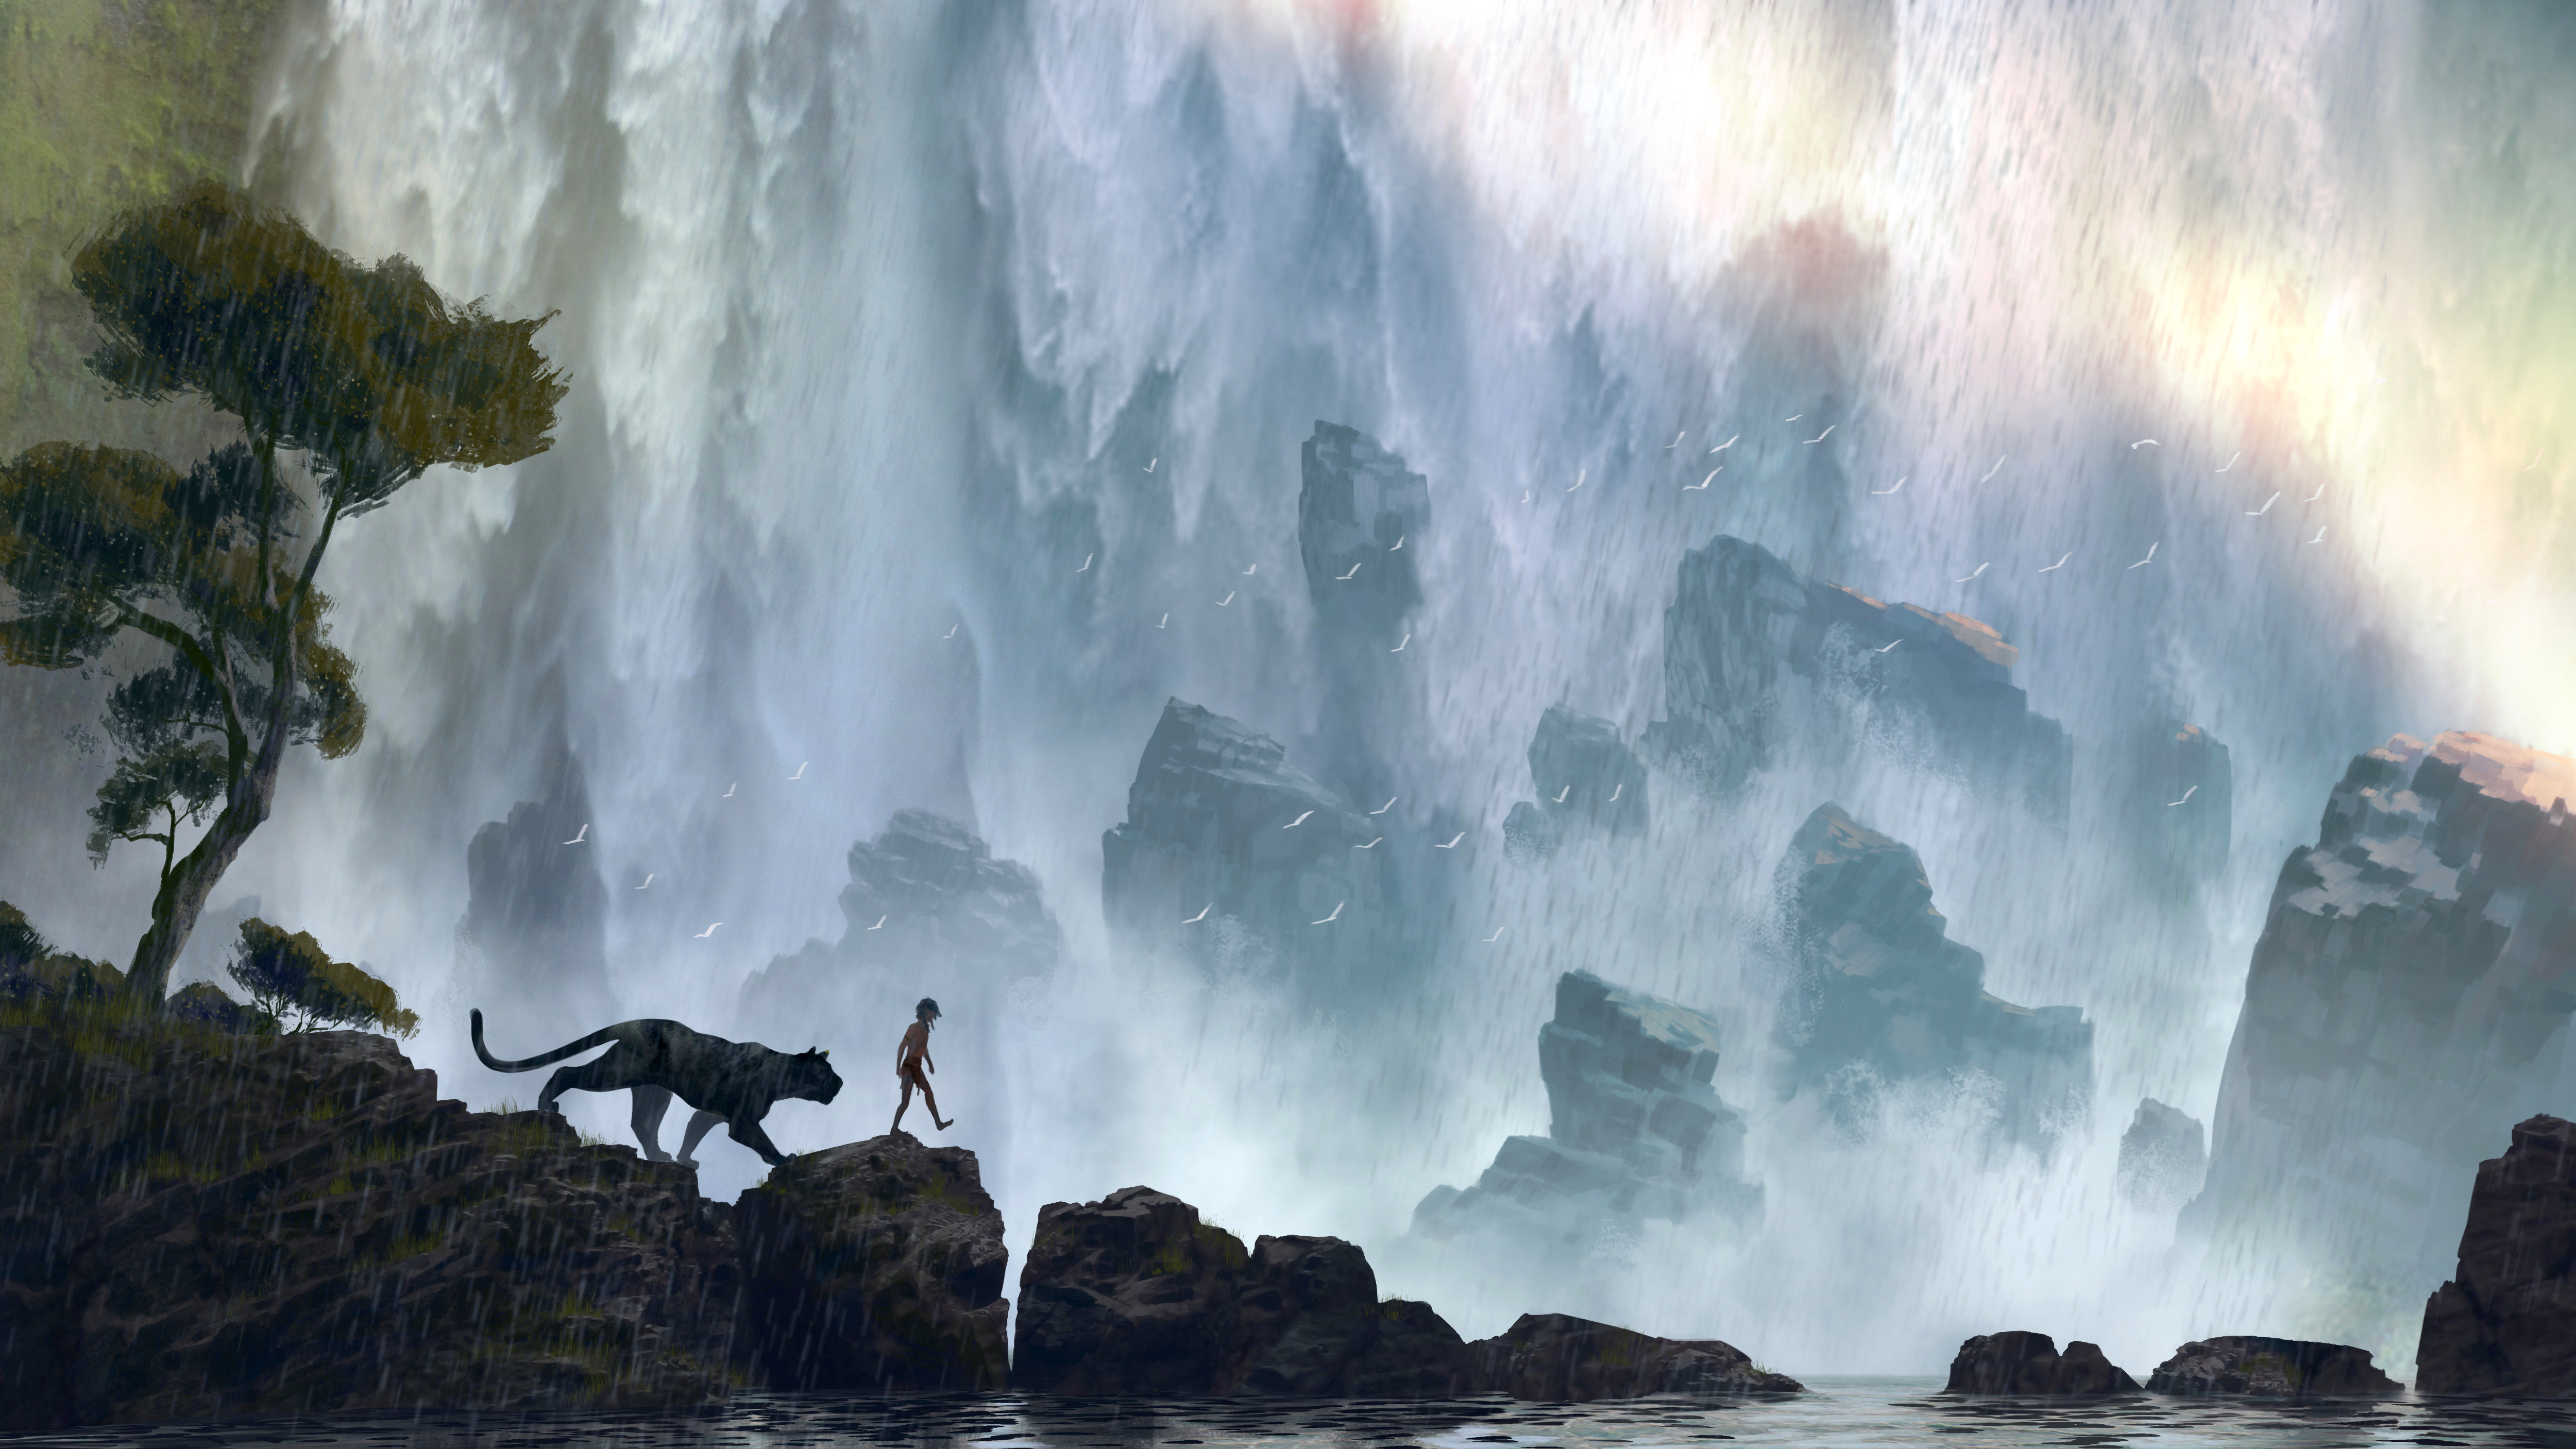 The Jungle Book 2016 4k Ultra HD Wallpaper Background Image